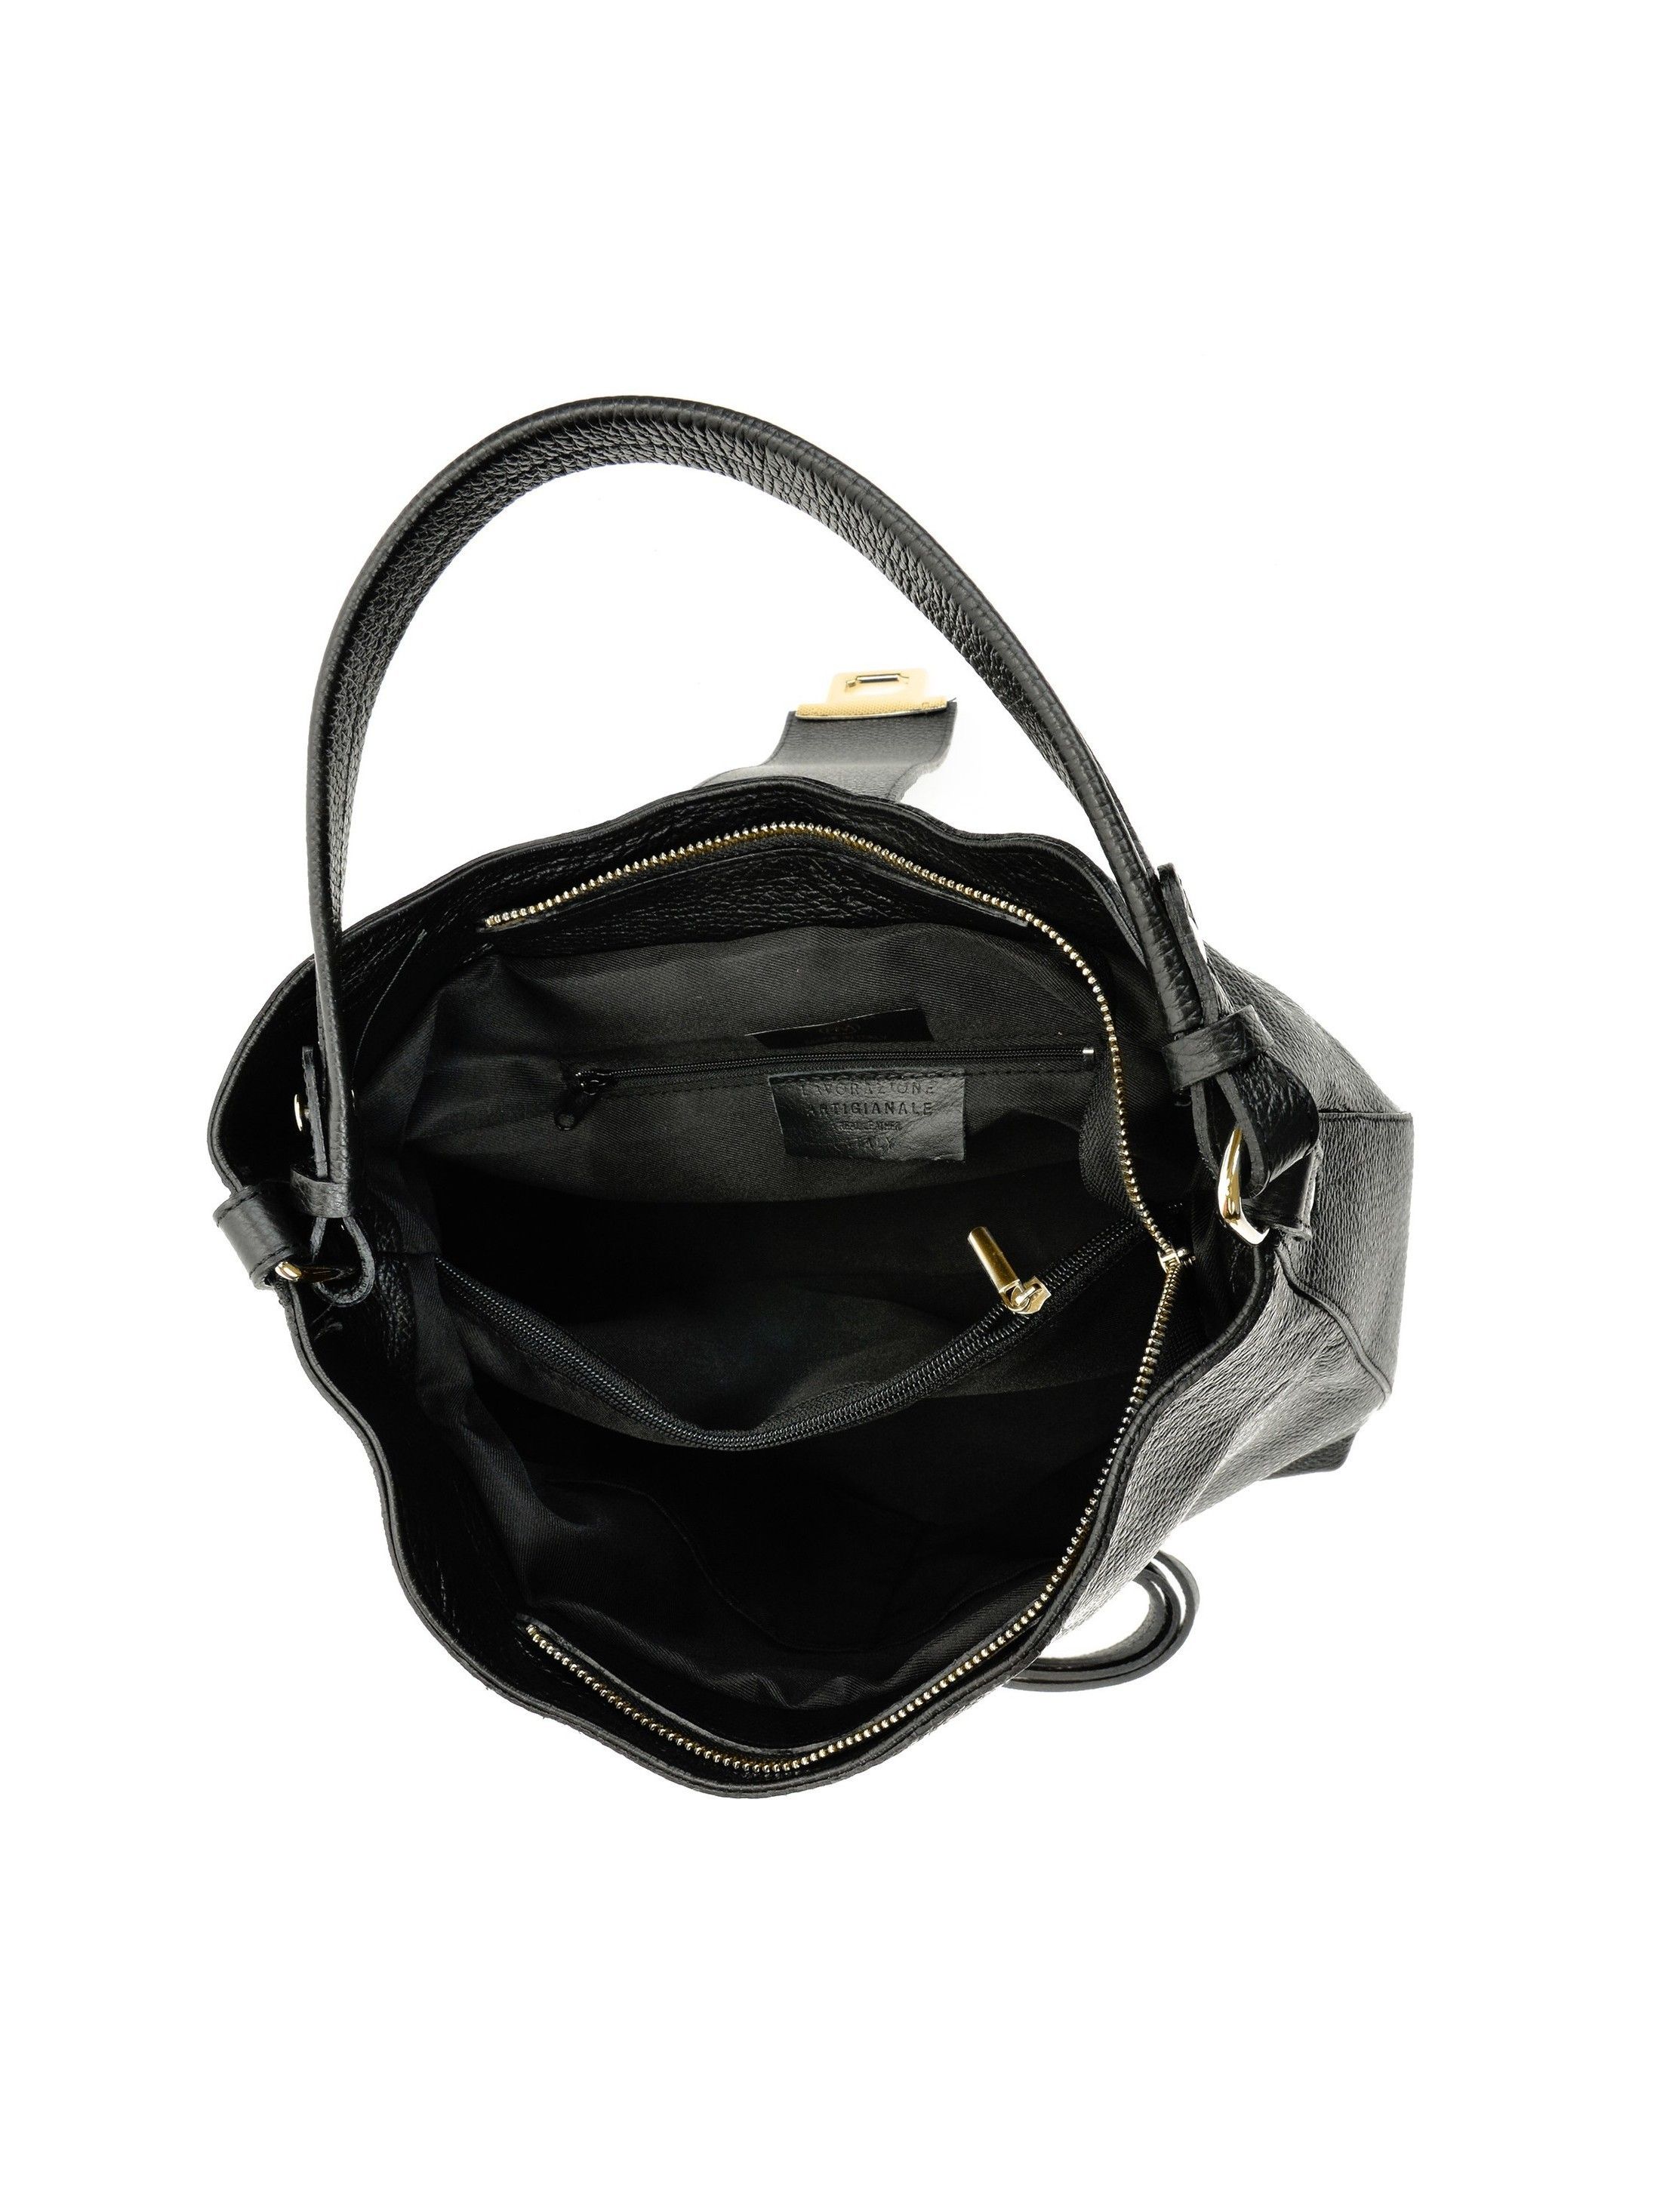 Top Handle Bag
100% cow leather
Top zip closure
Double compartment bag
Inner zipped compartment
Interior zip pocket
Back zip pocket
Dimensions (L): 31x36x16 cm
Handle: 50 cm FIX
Shoulder strap: 1x120 cm - adjustable